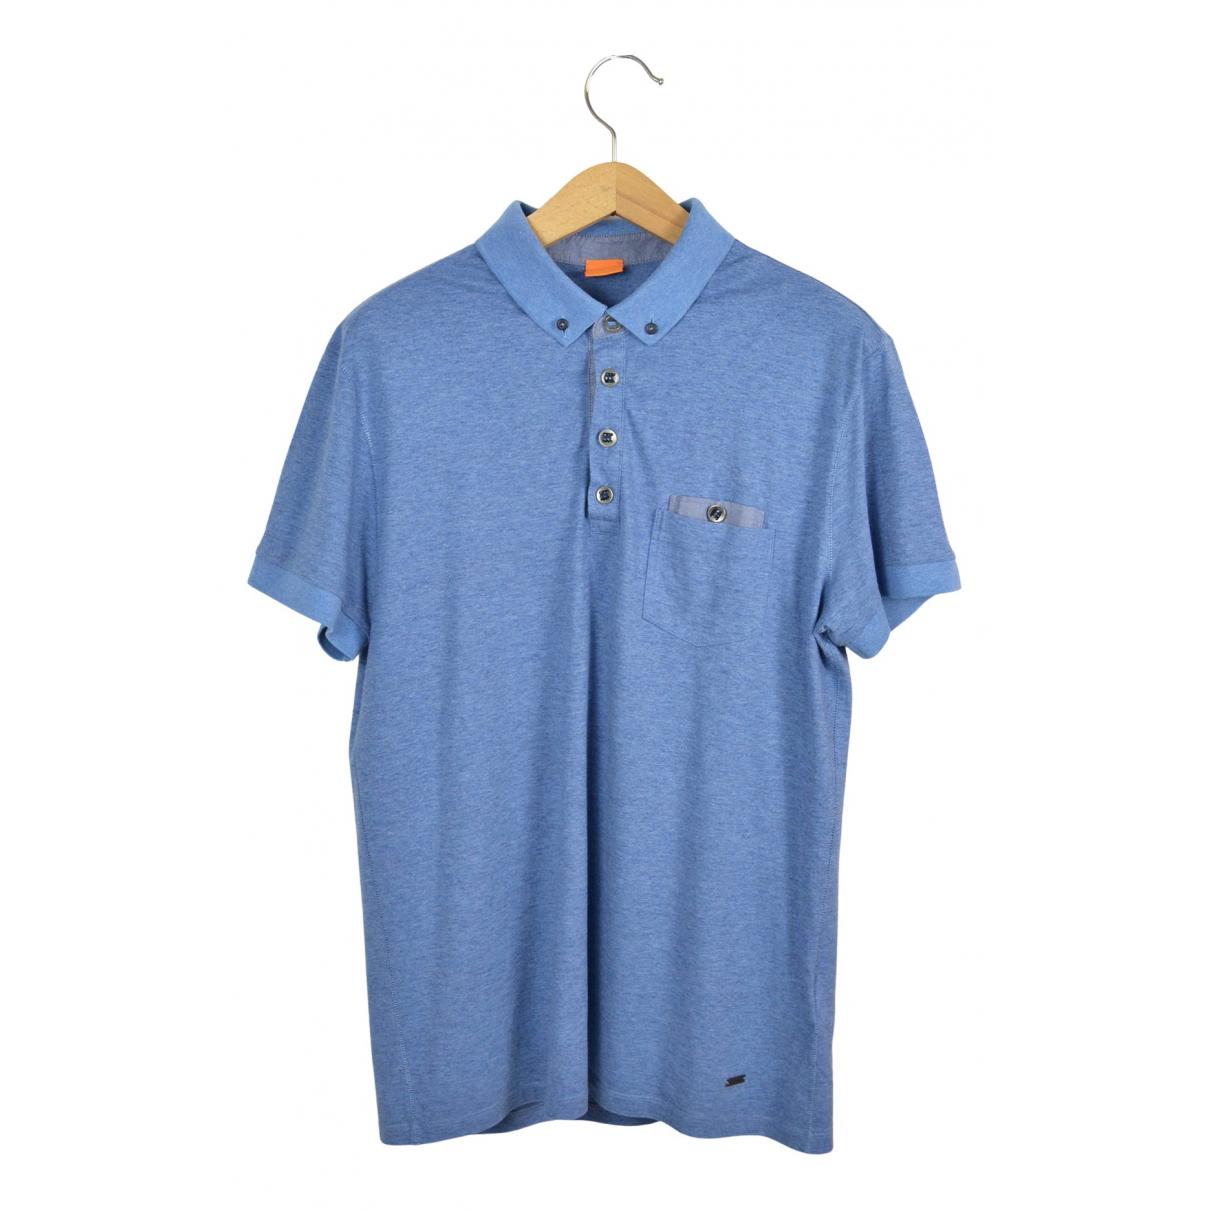 Boss in 22881868 Polo International Cotton Blue - Orange shirt L size